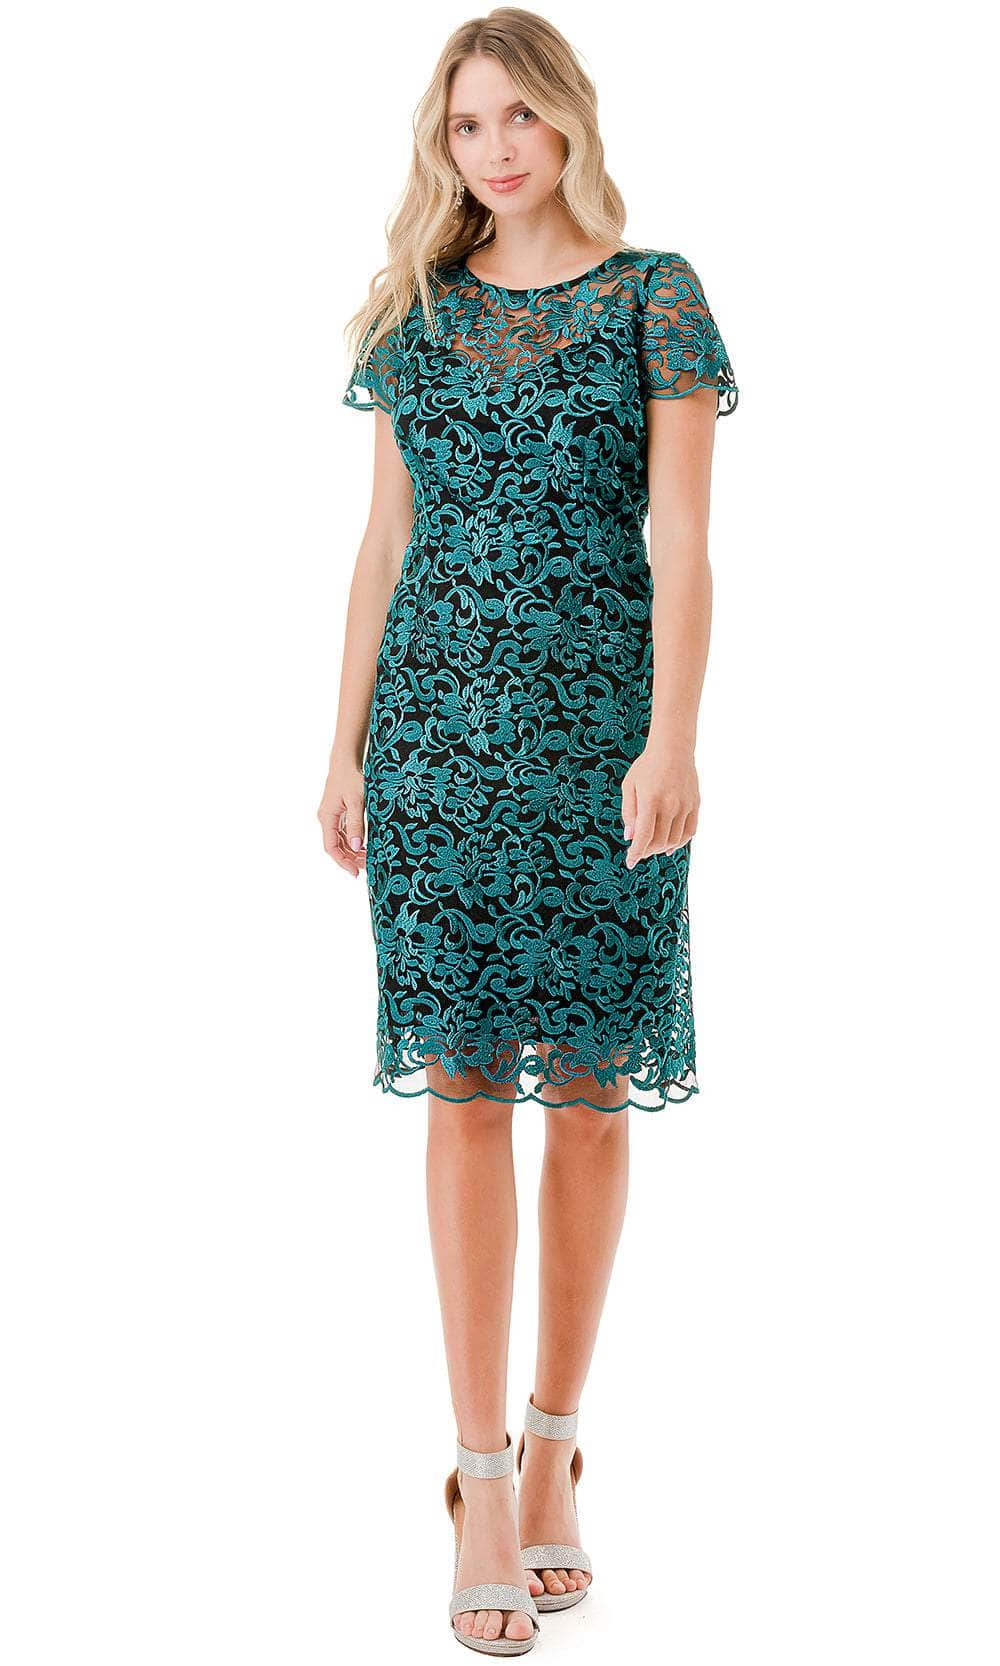 Aspeed Design D713 - Illusion Jewel Knee Length Formal Dress Special Occasion Dress XXS / Bk-Green